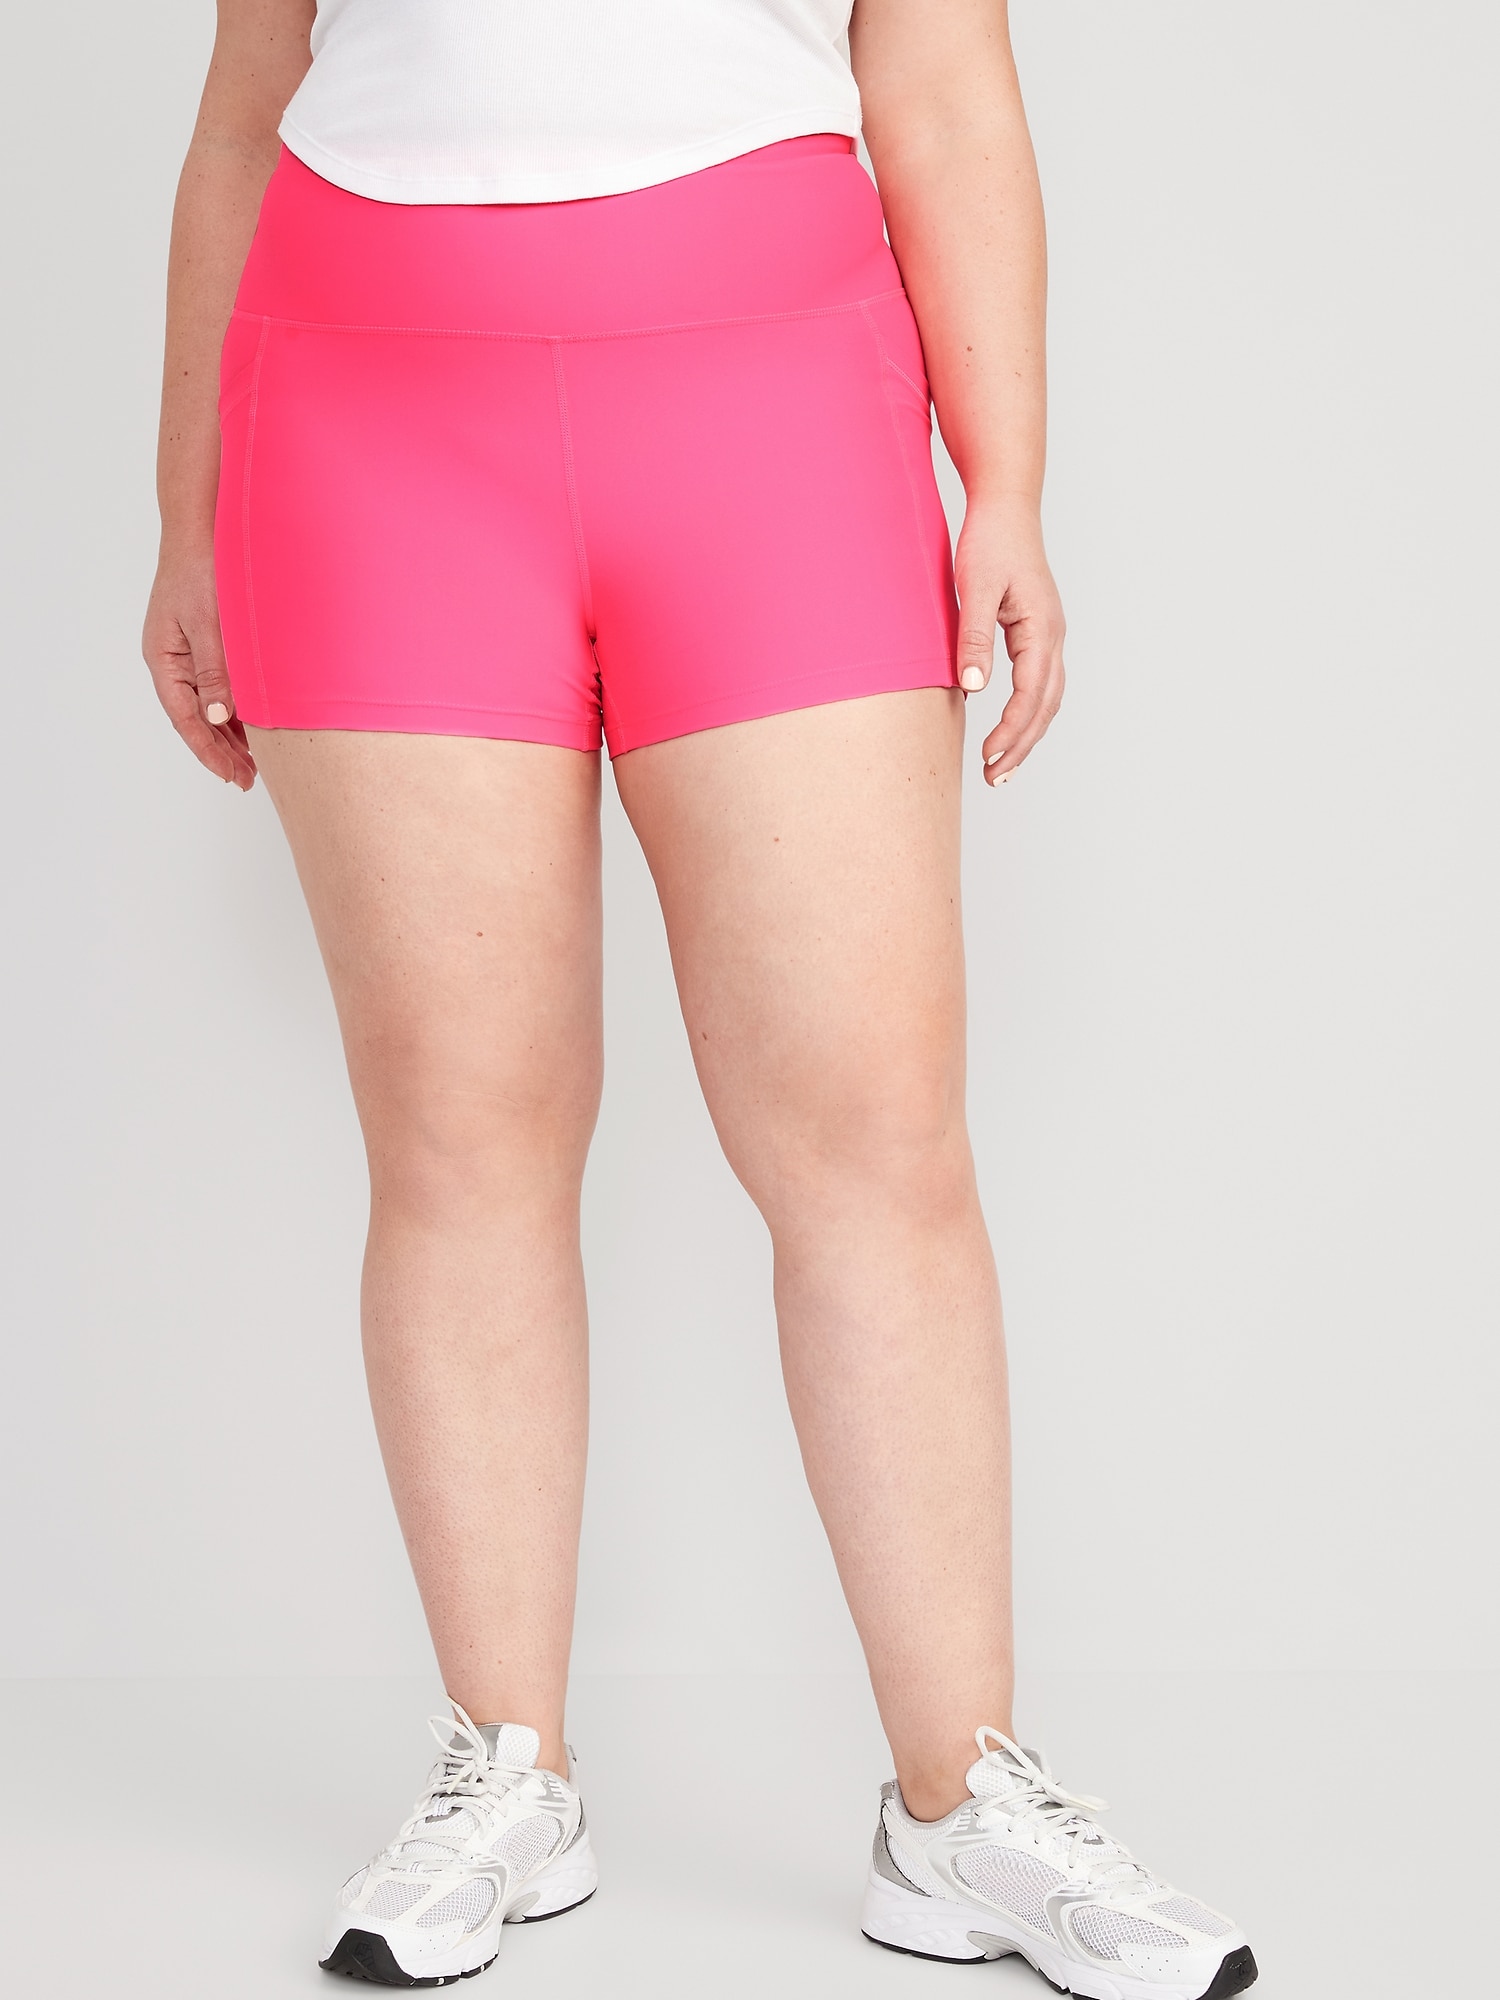 Women's Pink Shorts - Jean, Biker, Soft & High Waisted Shorts